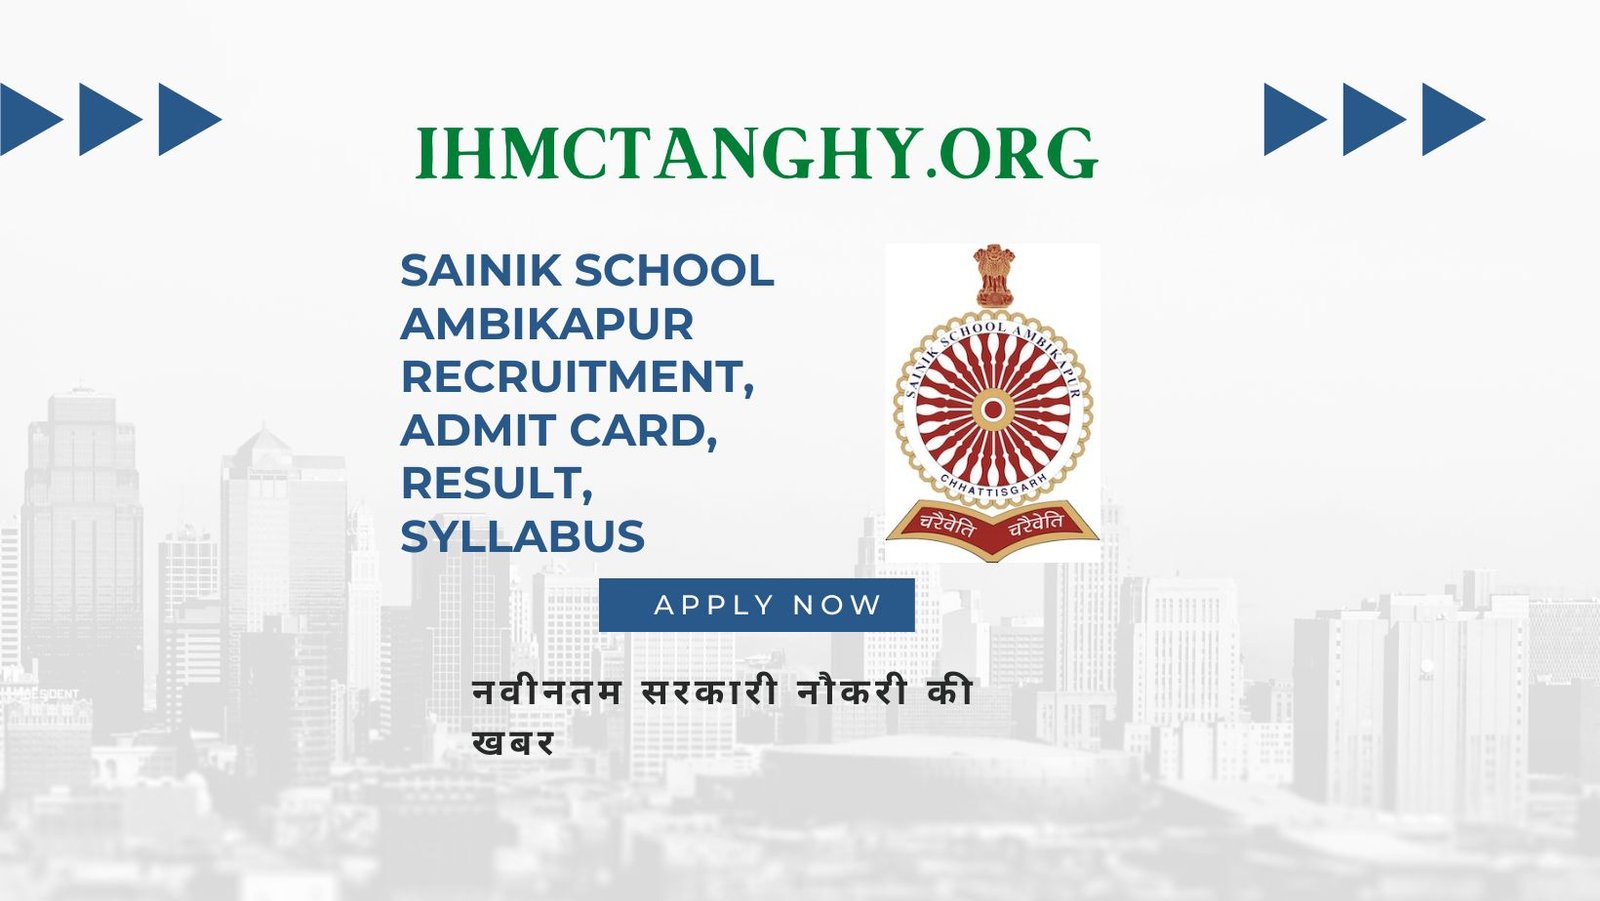 Sainik School Ambikapur Recruitment